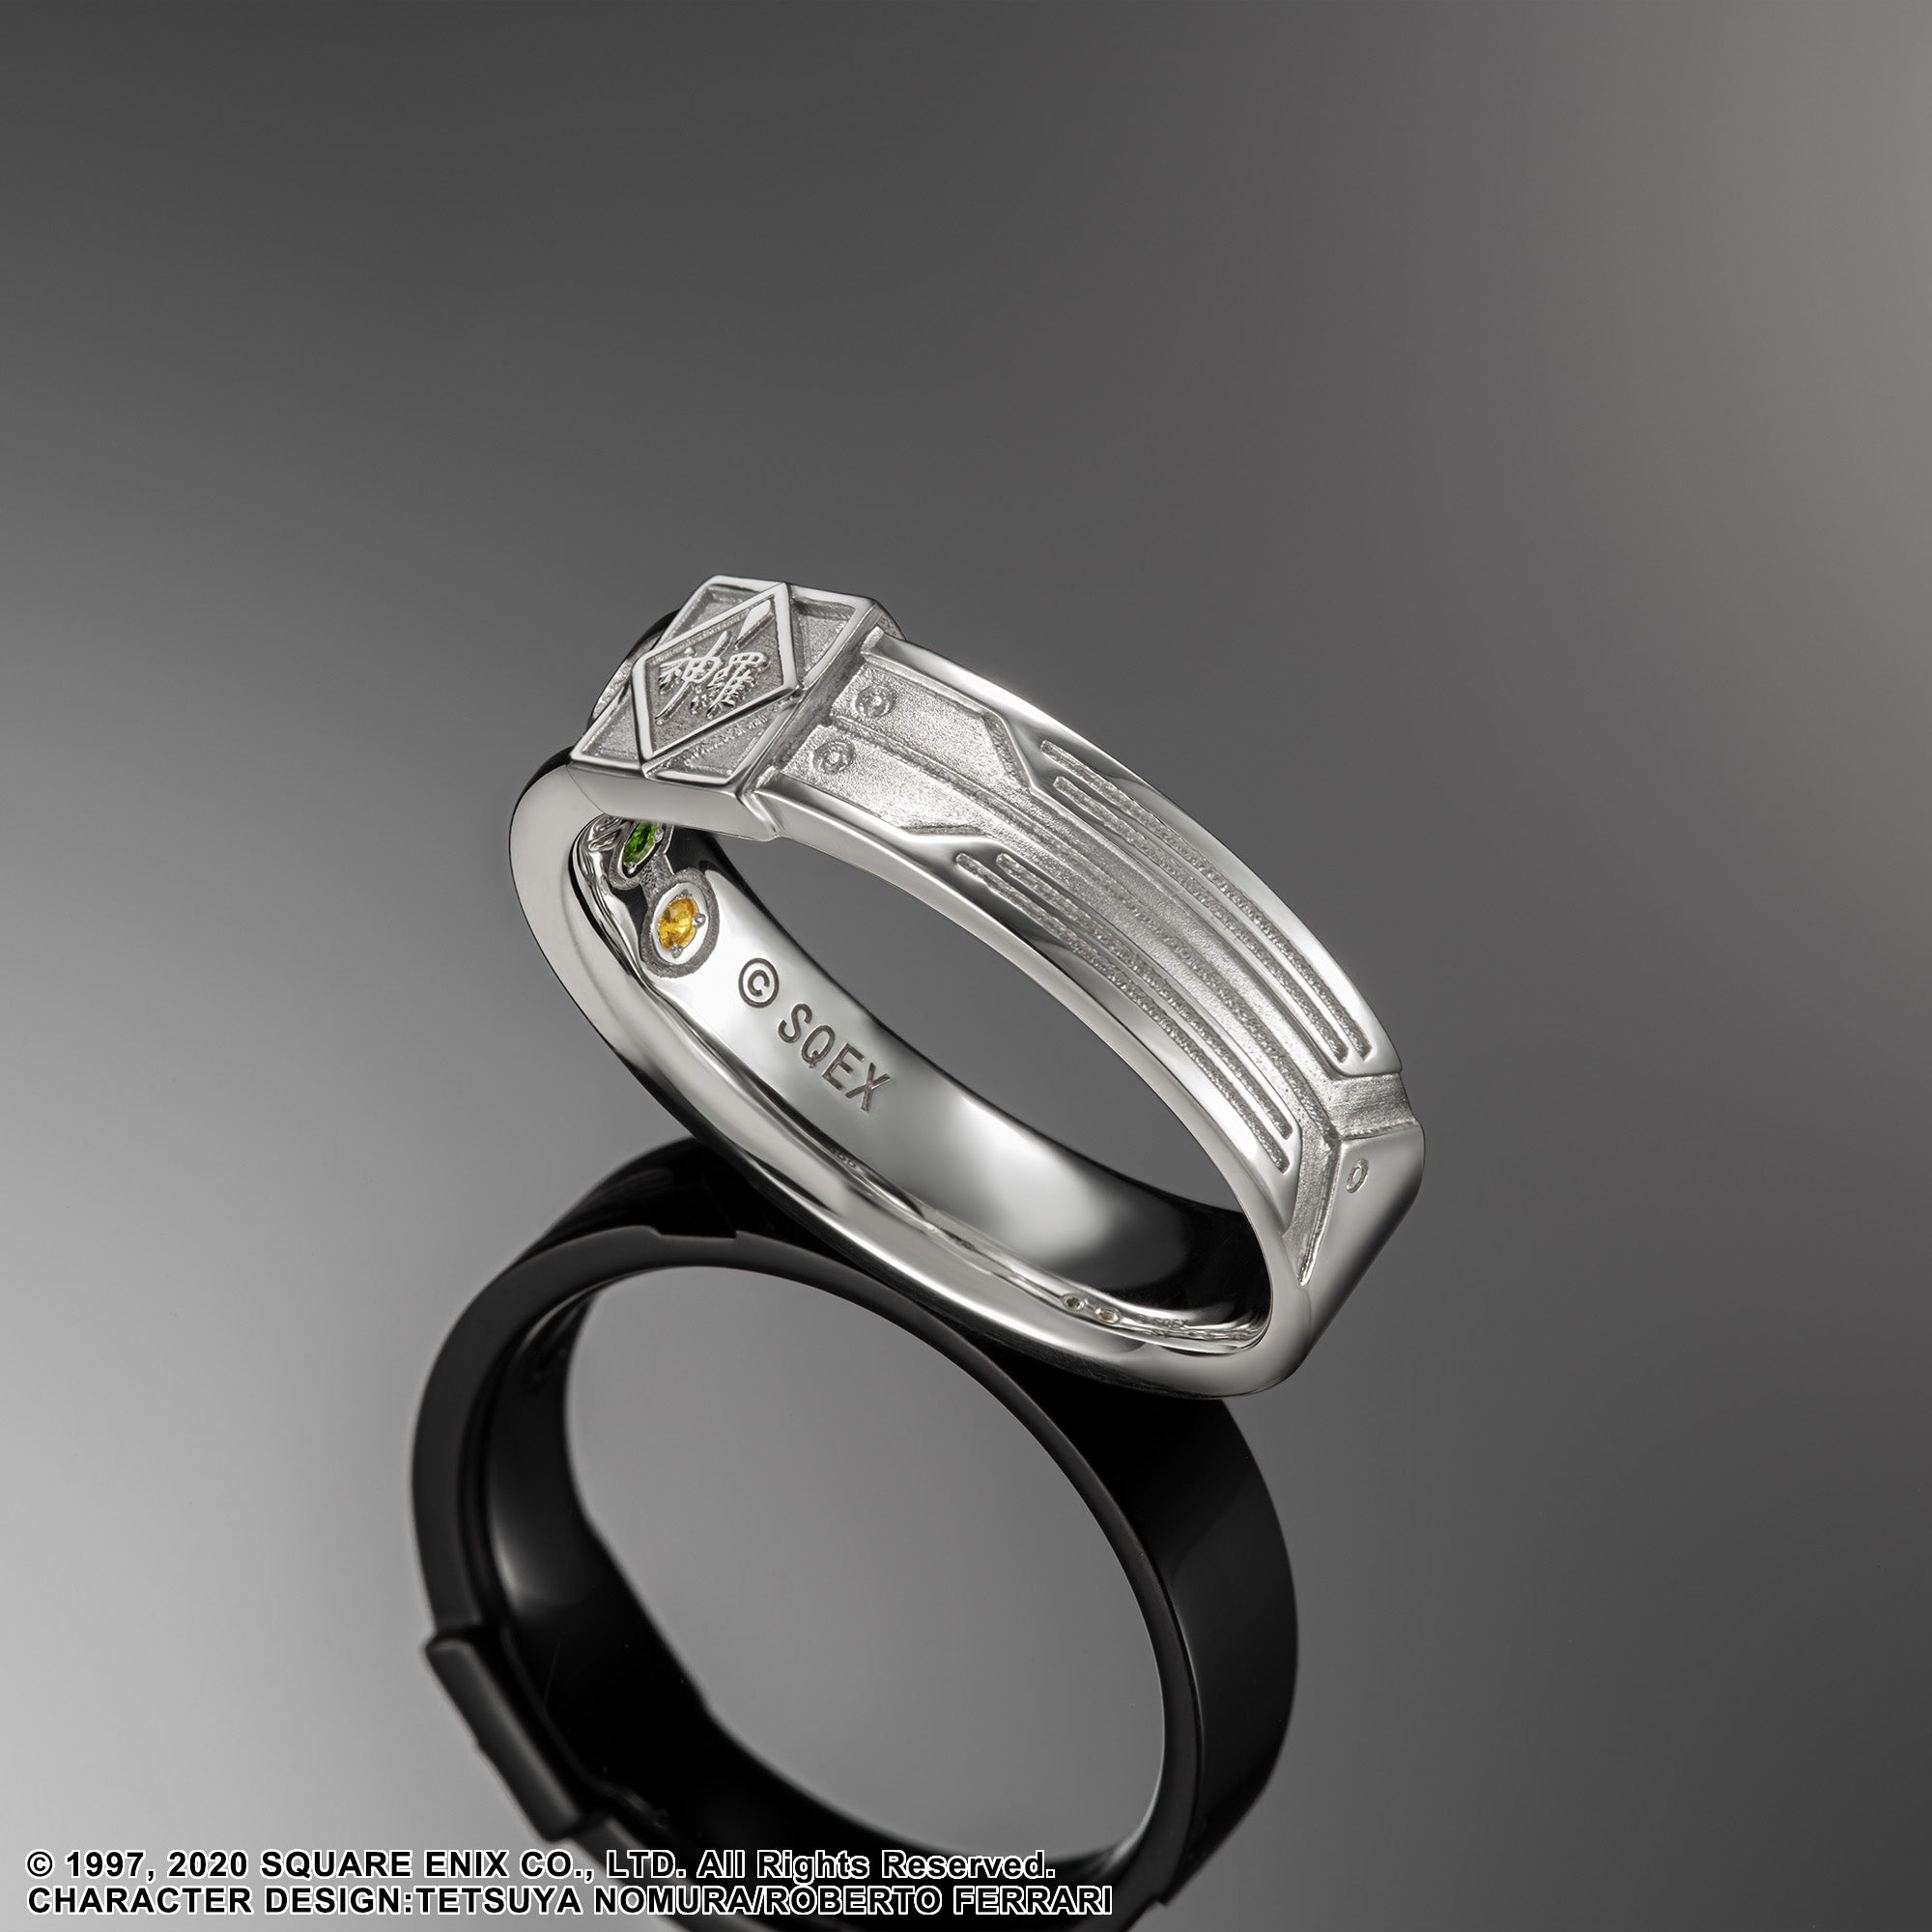 FINAL FANTASY VII Silver Ring SHINRA MATERIA TYPE A (Emerald + Blue Sapphire) Size 23